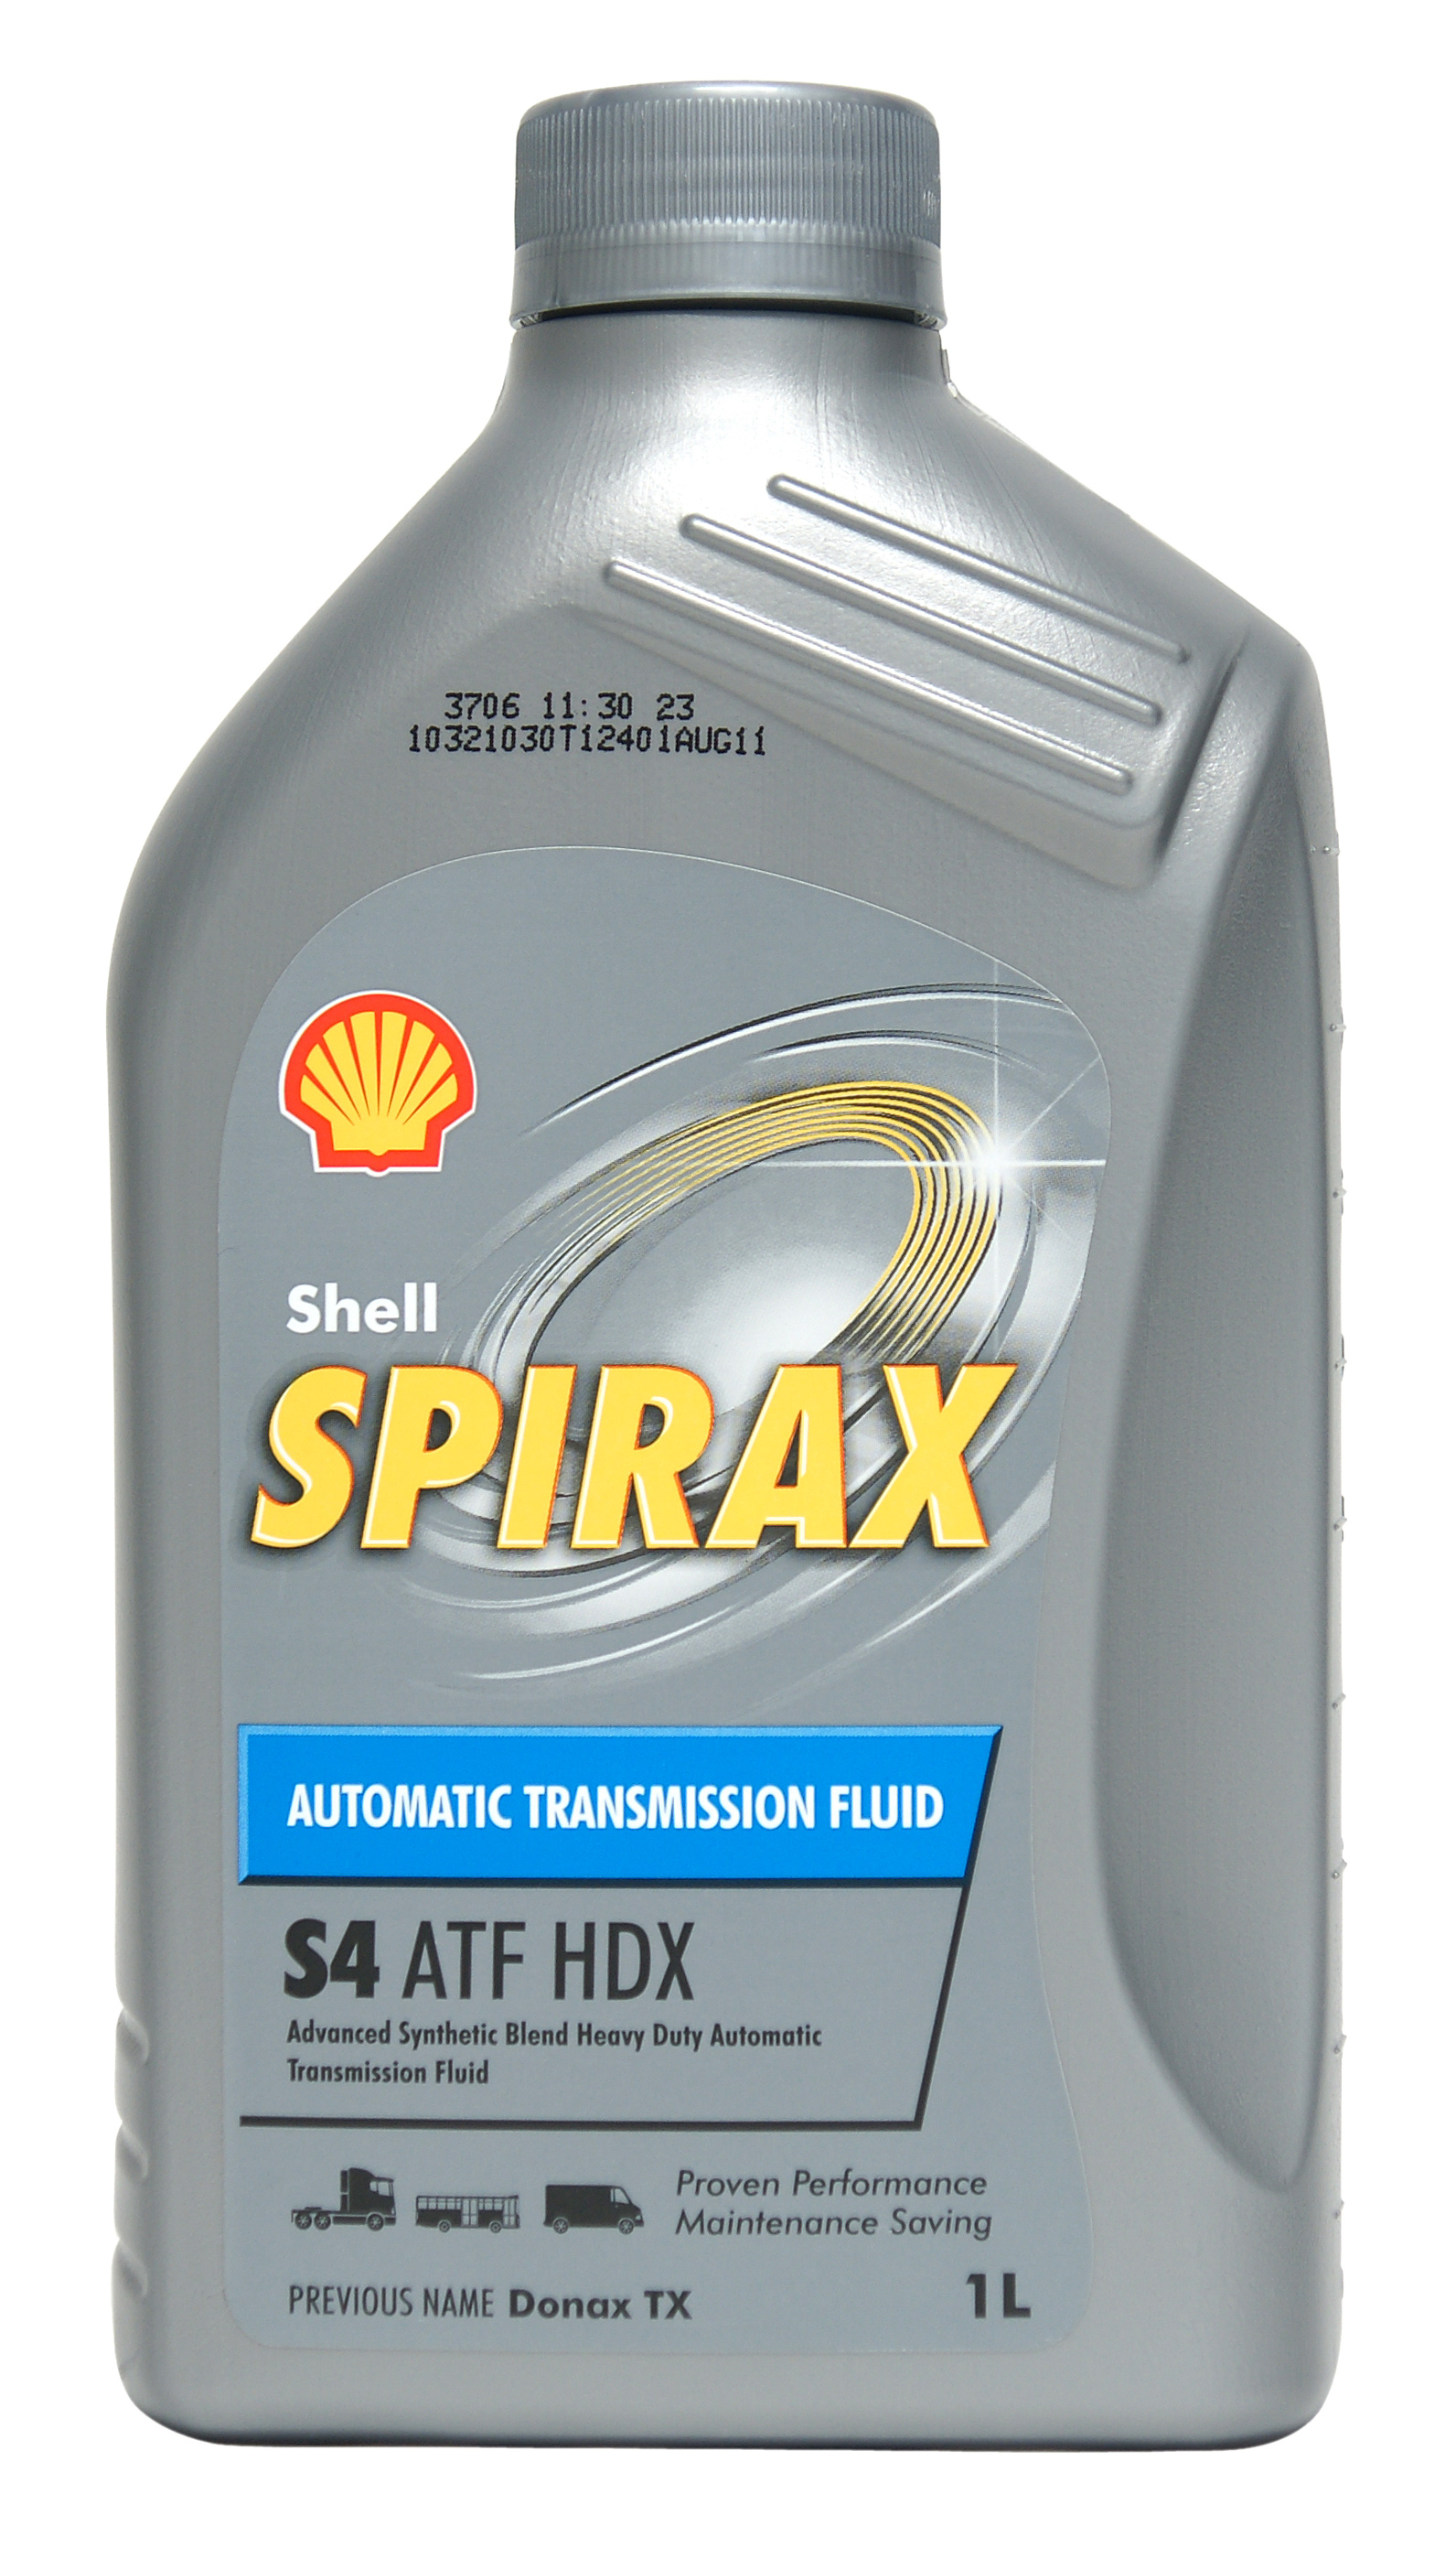 S4 atf hdx. Shell Spirax s4 ATF hdx. Масло Shell Spirax s4 ATF hdx. Shell Spirax s4 ATF hdx (20л). Shell Spirax ATF 4.